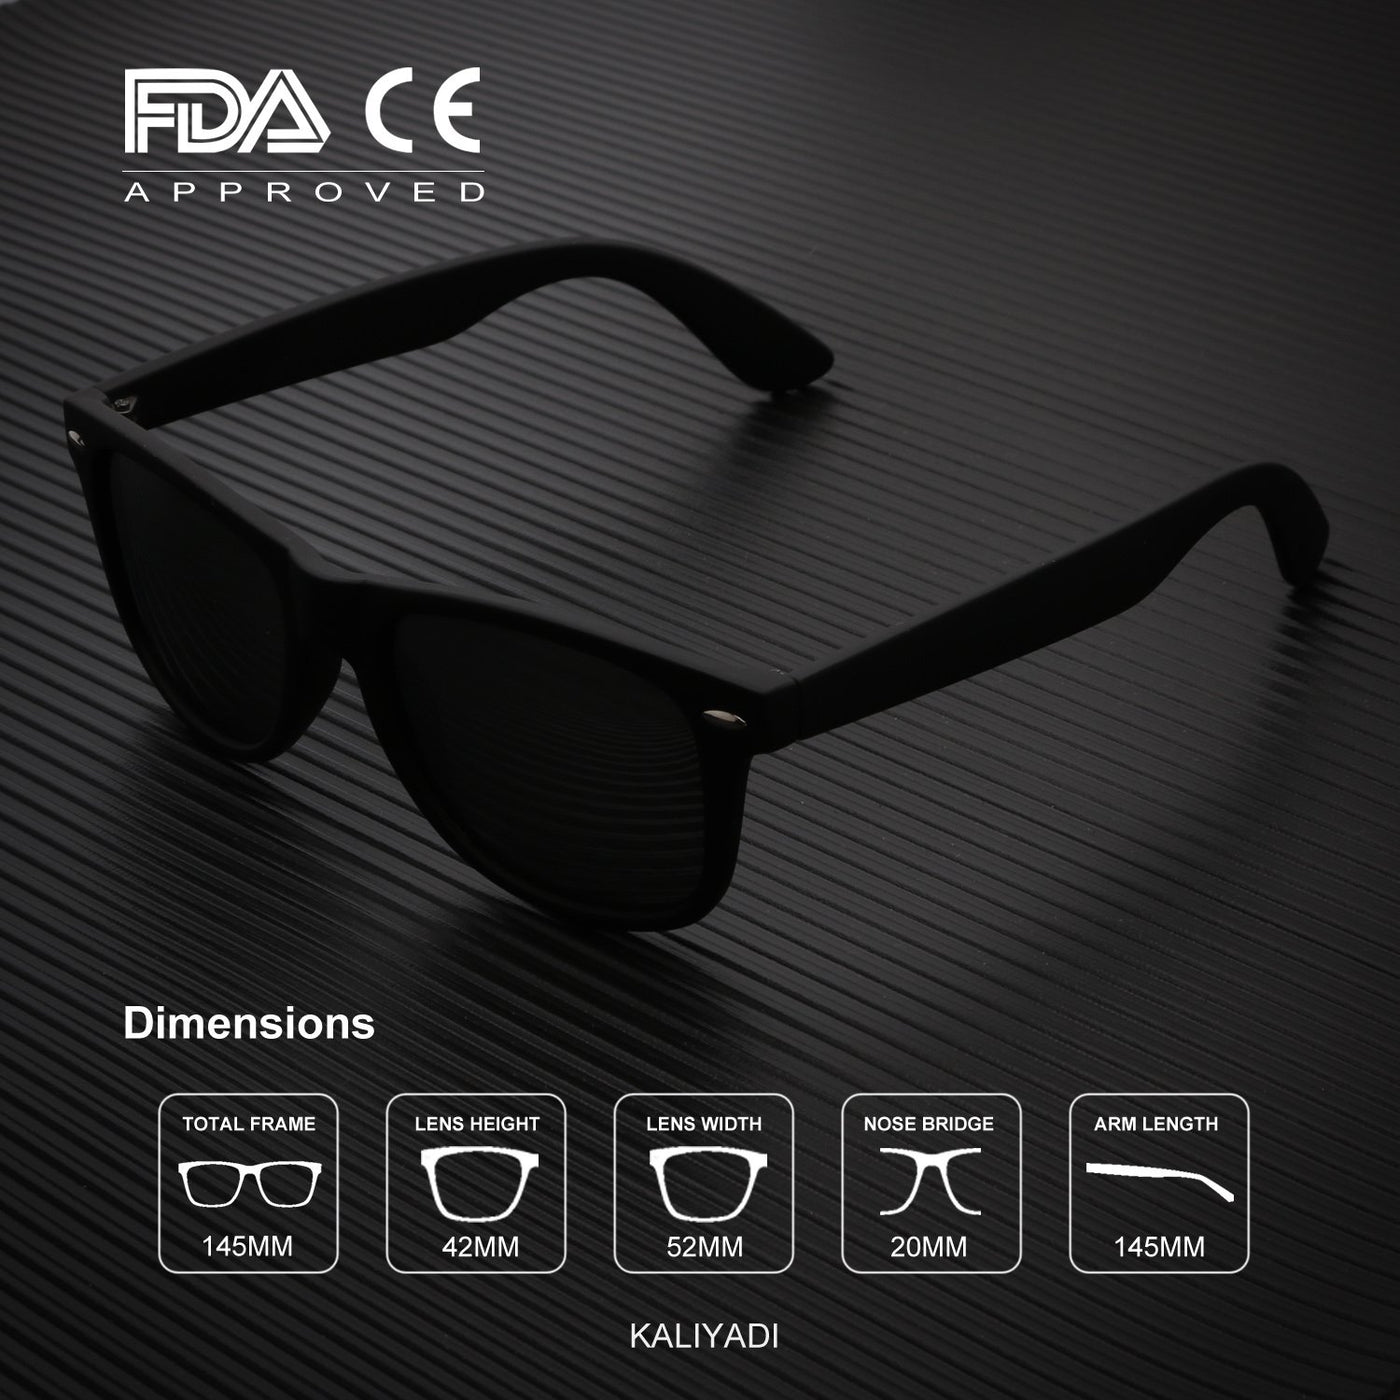 TJUTR Men's Photochromic Sunglasses with Polarized Lens for Outdoor 100% UV  Protection, Anti Glare, Reduce Eye Fatigue (Black Wide Frame/Grey